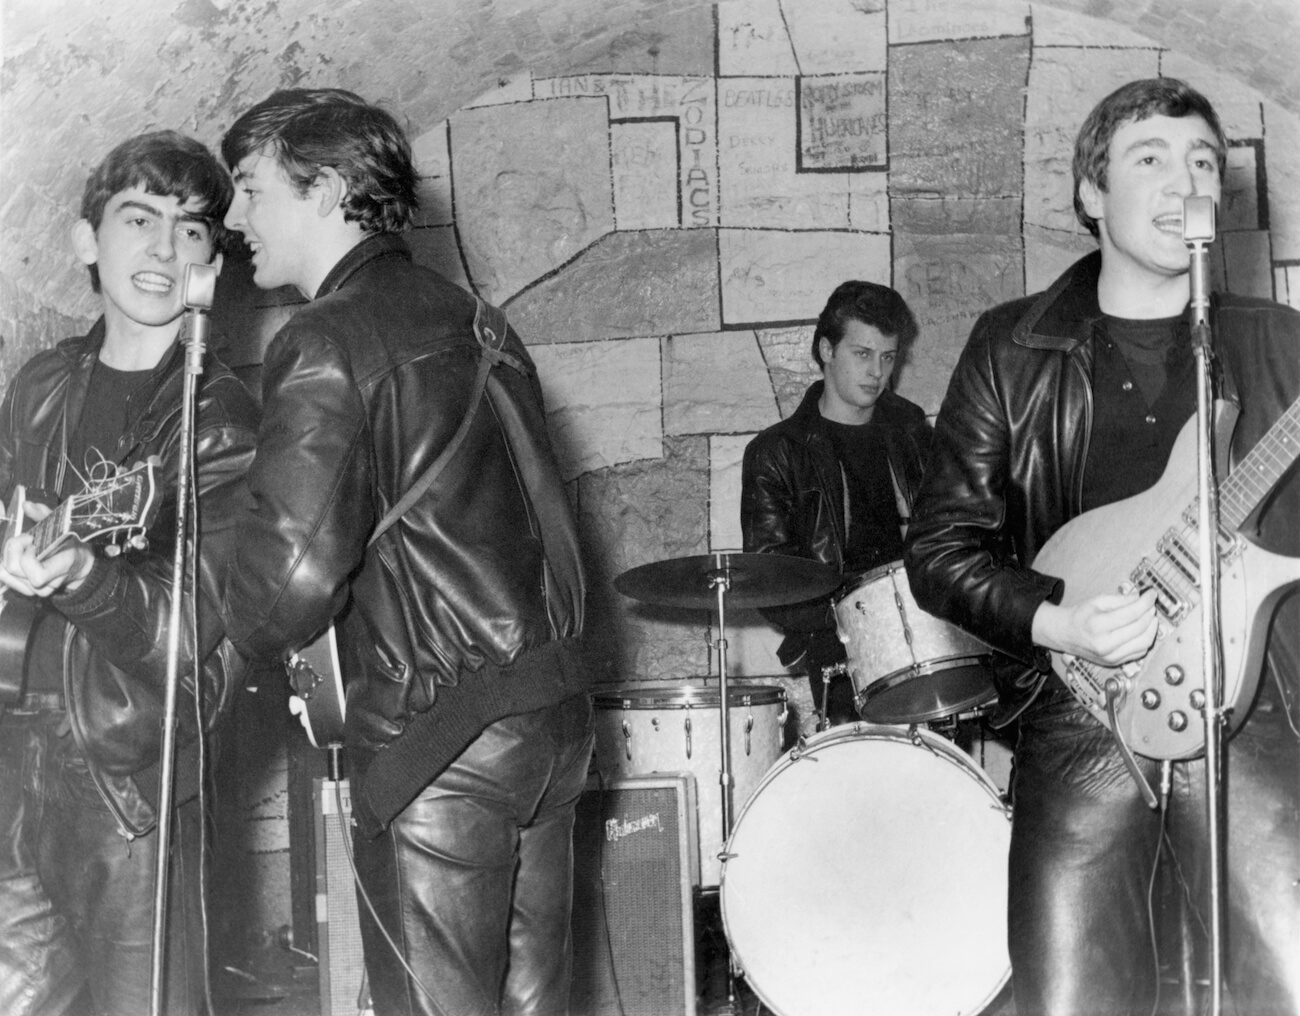 Paul McCartney, John Lennon, George Harrison performing at The Cavern Club in 1961.